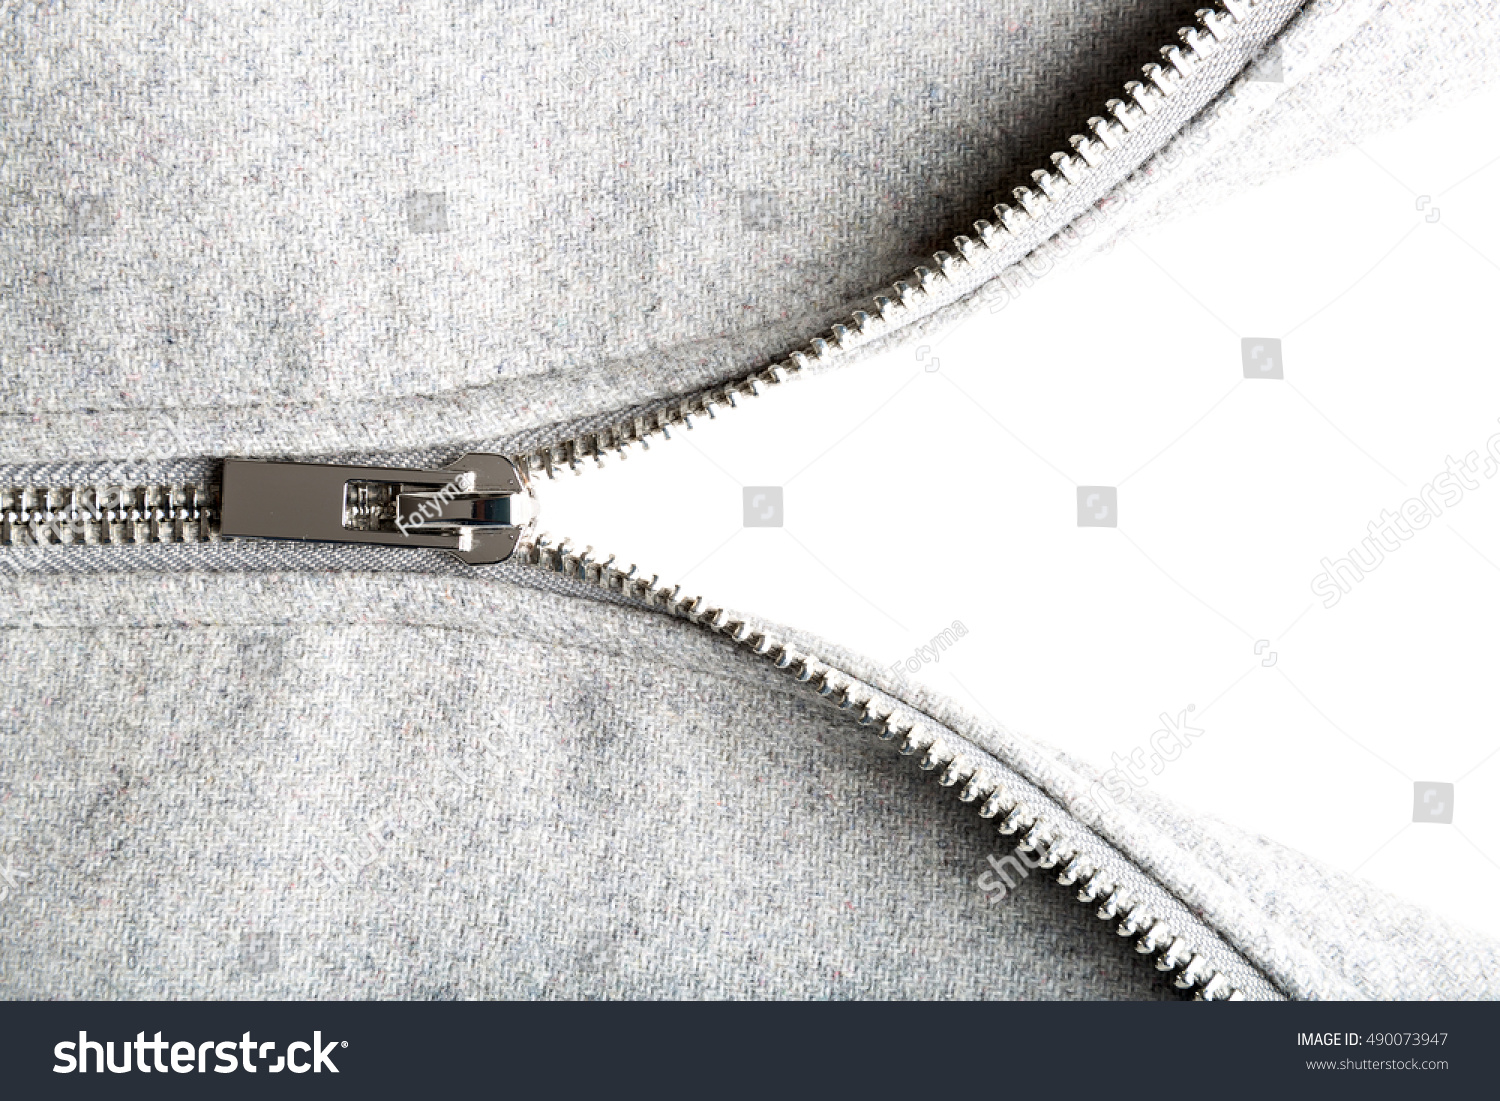 2,187 Unzipped jacket Images, Stock Photos & Vectors | Shutterstock